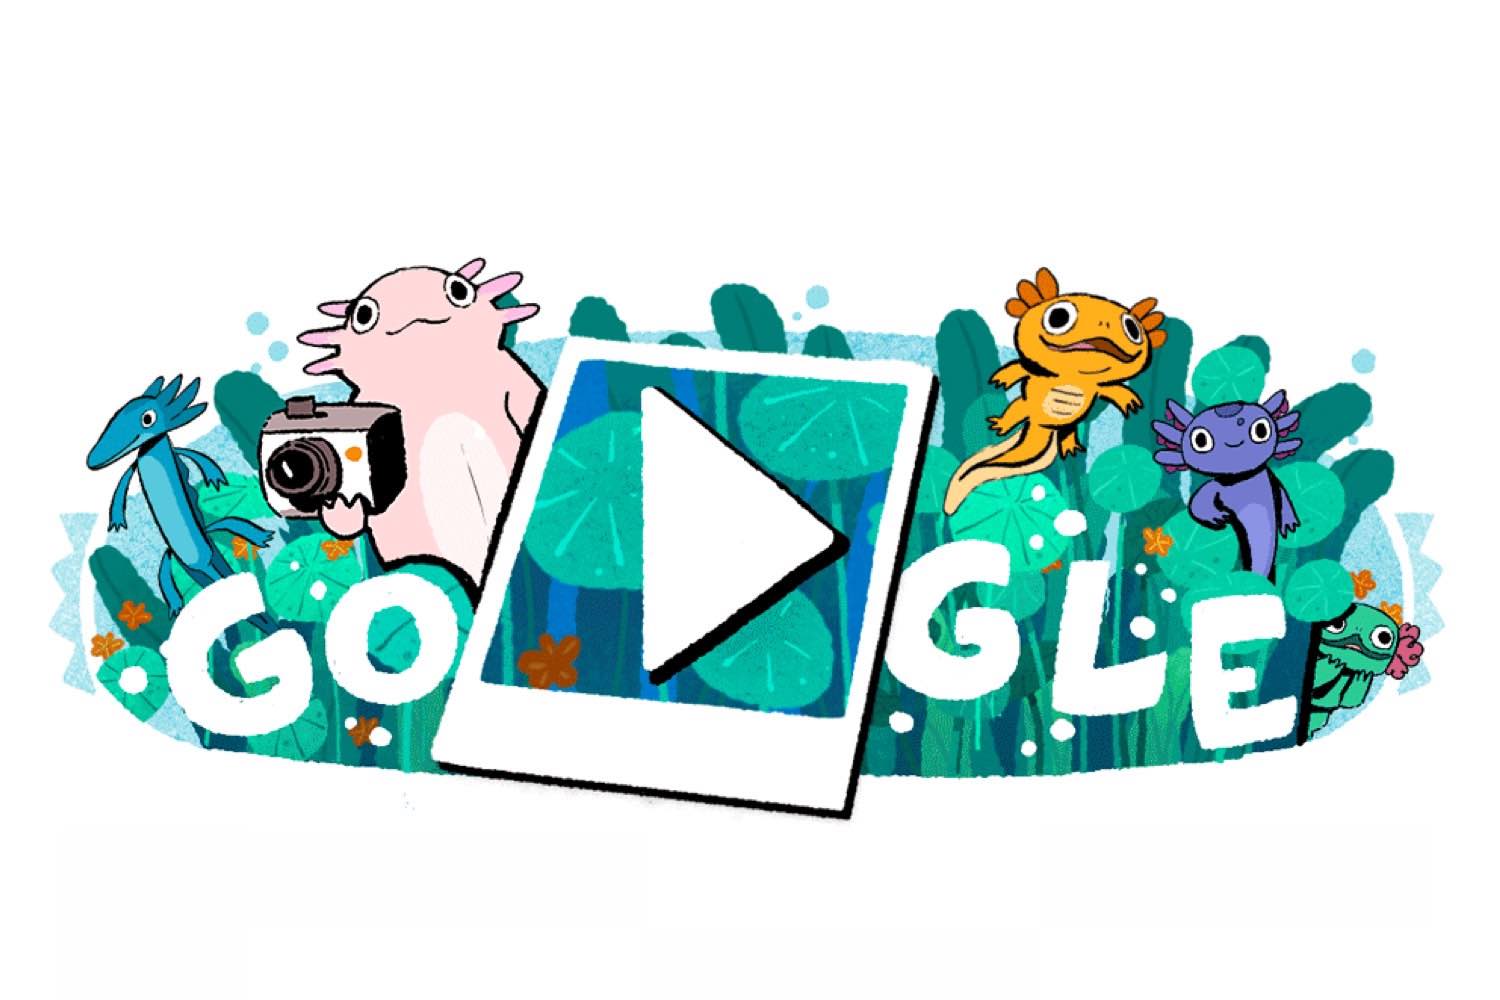 juego del ajolote google, axolotl google